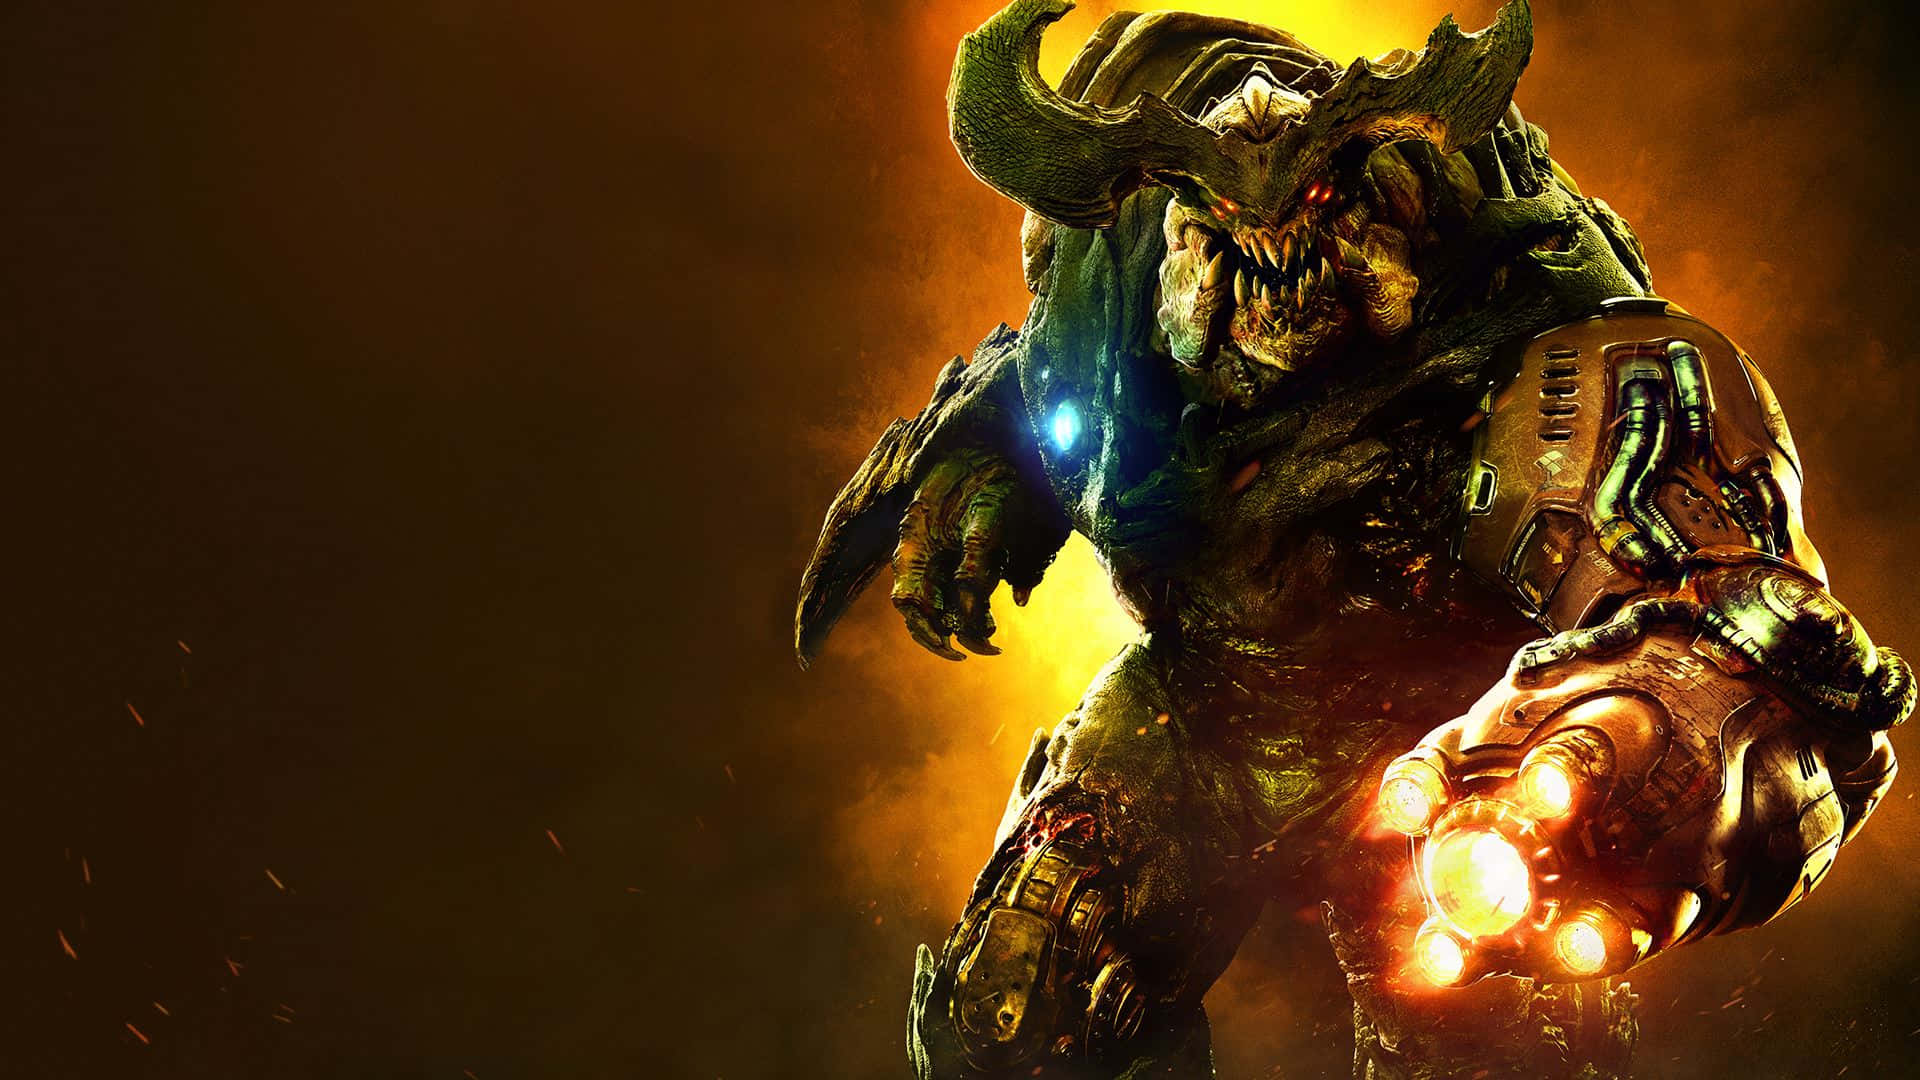 Chilling Thrills: Intense Doom Gameplay on High-Resolution Display